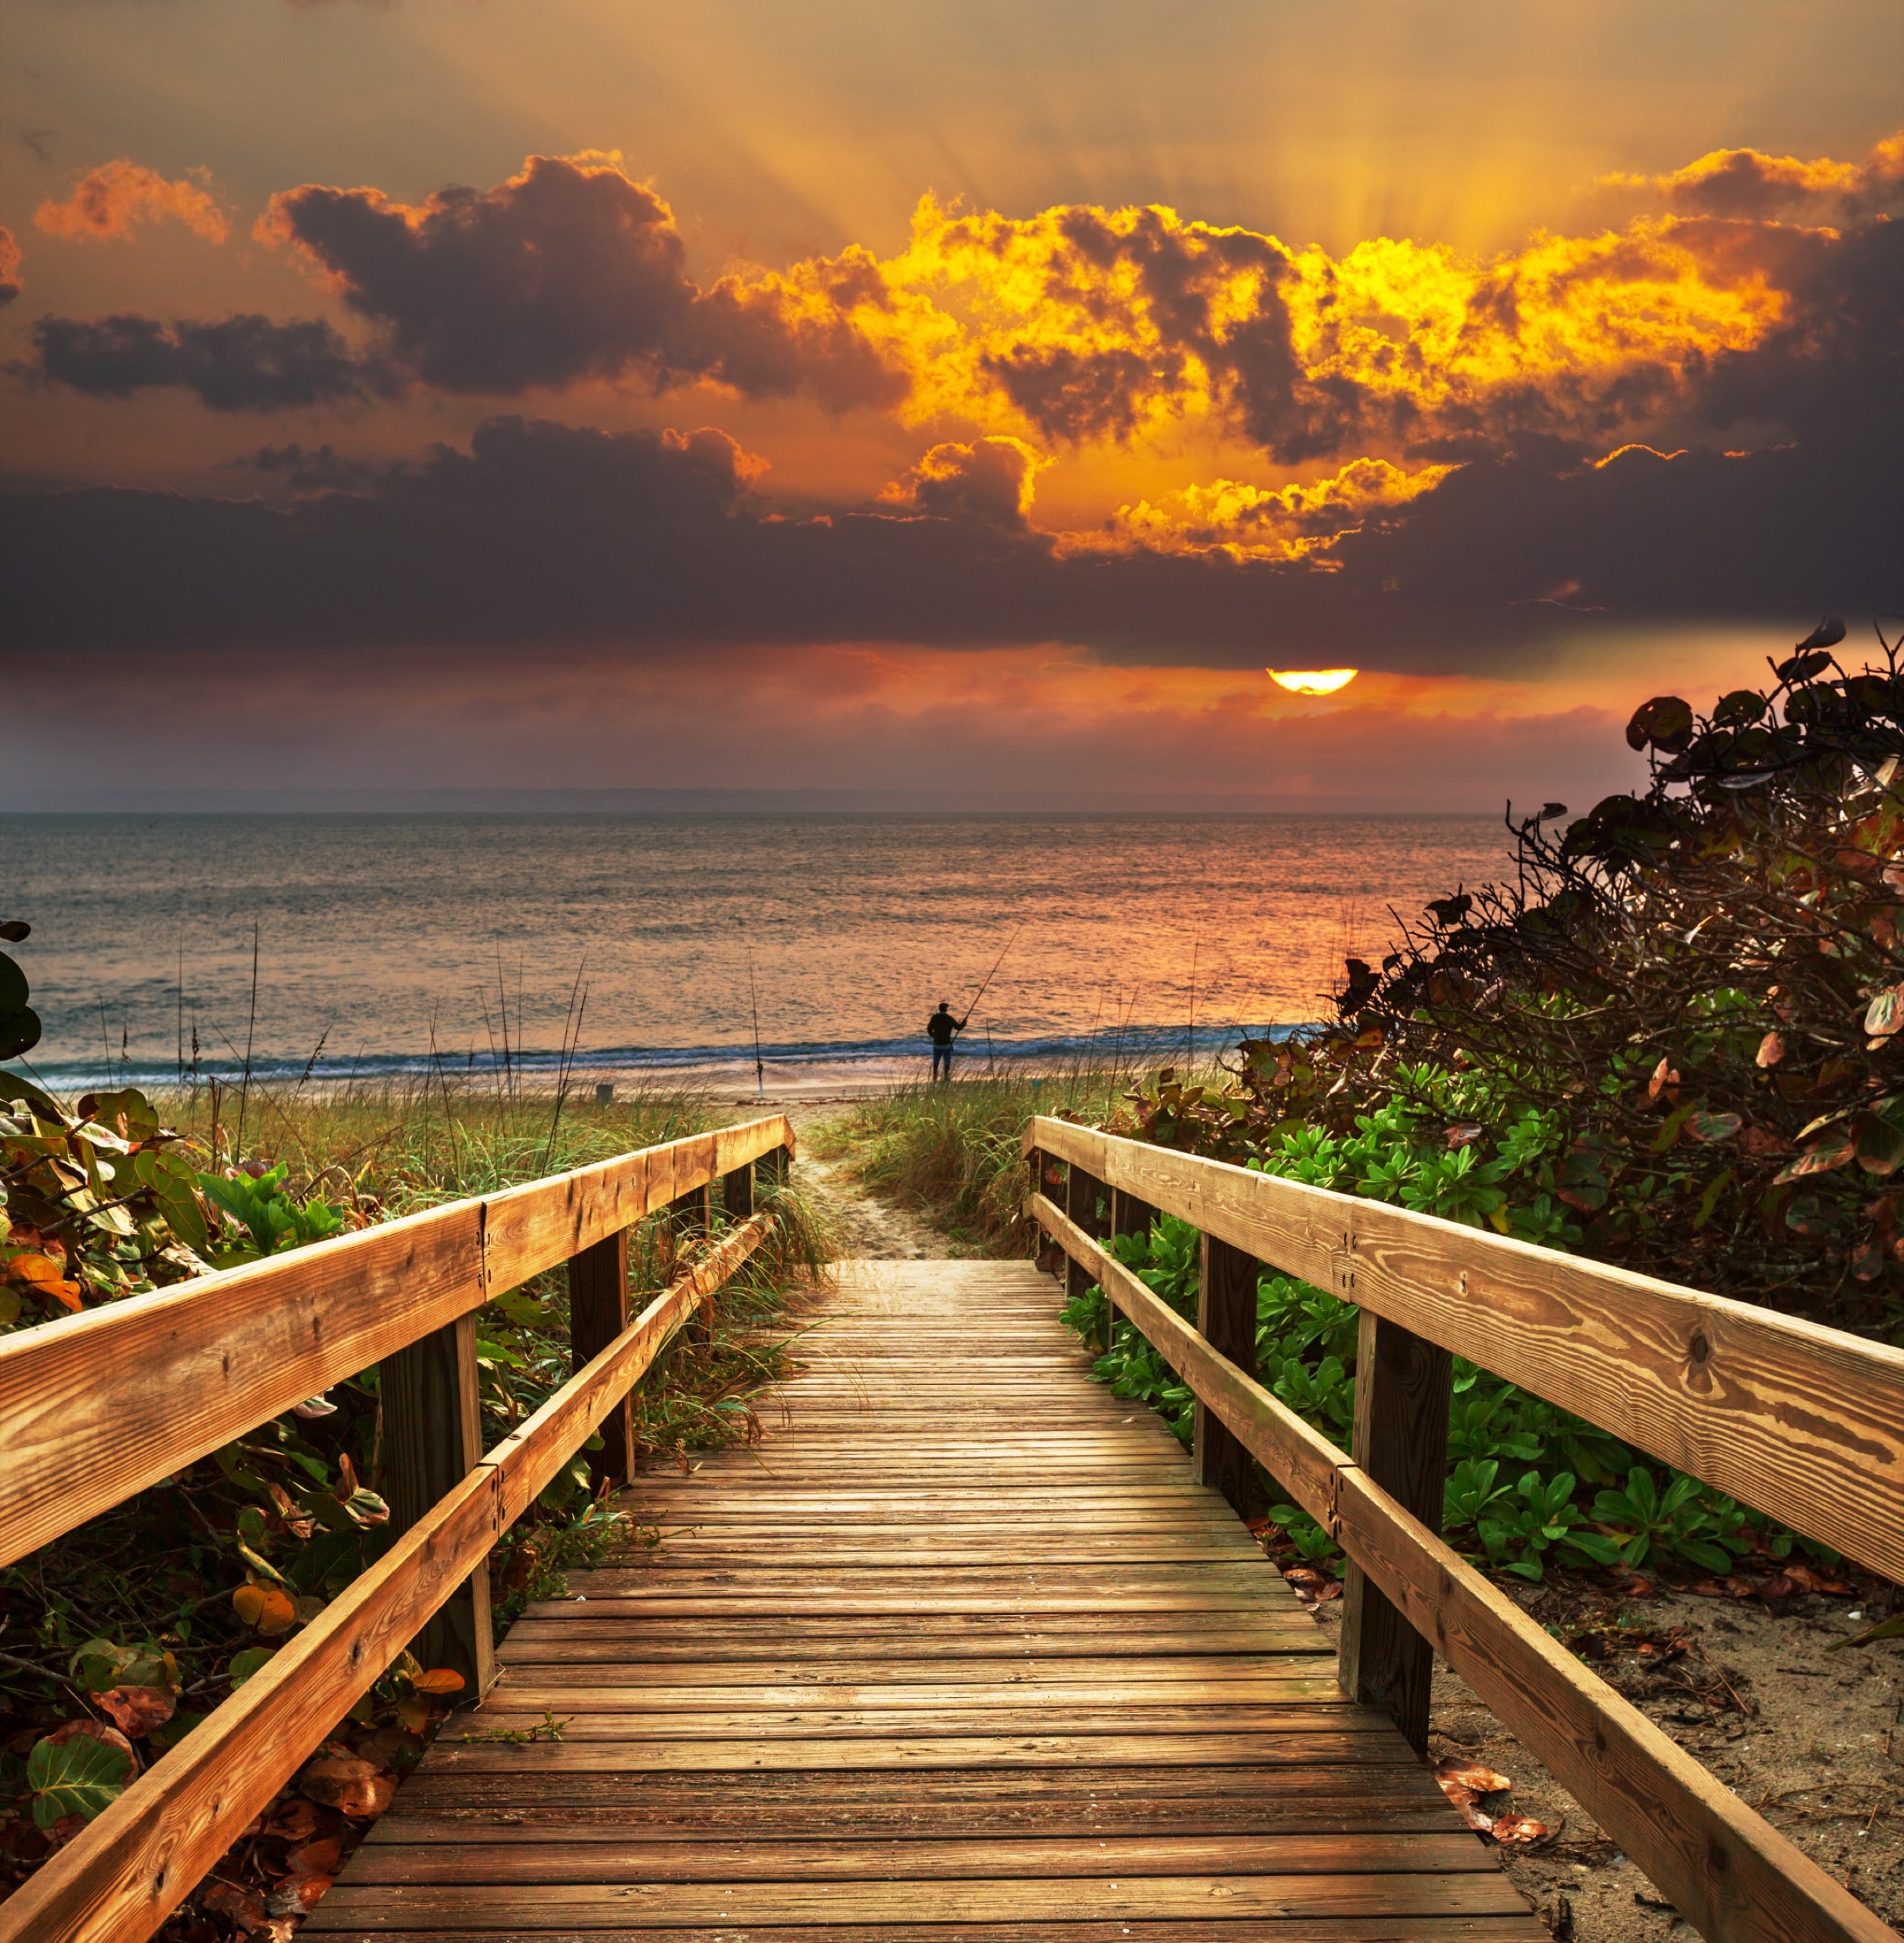 Boardwalk on beach at sunrise